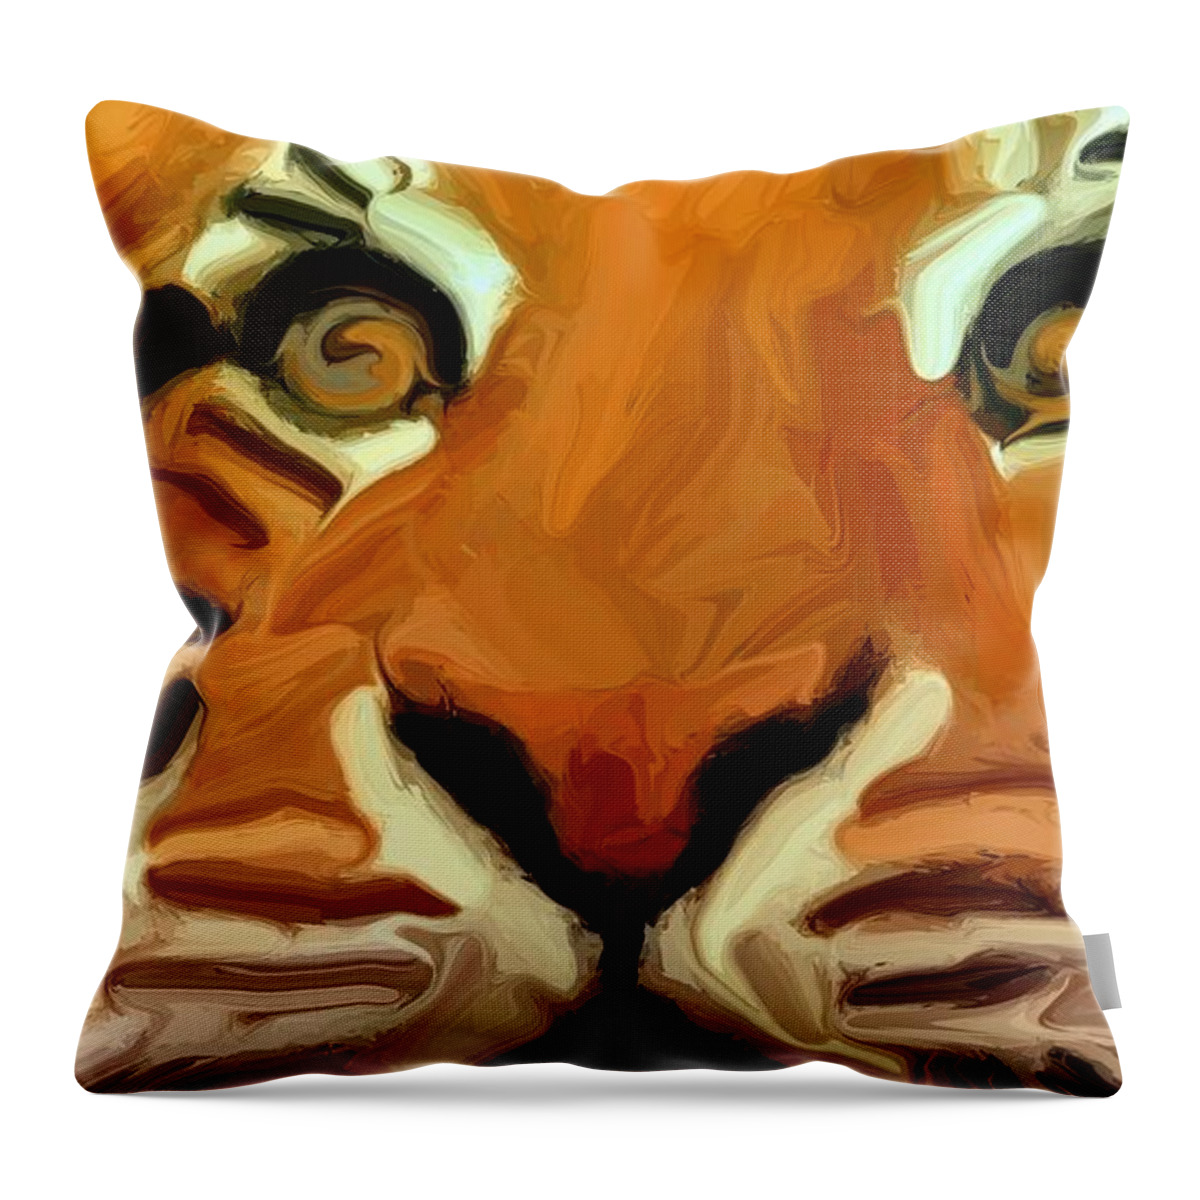 Tiger Throw Pillow featuring the digital art Tiger by Chris Butler